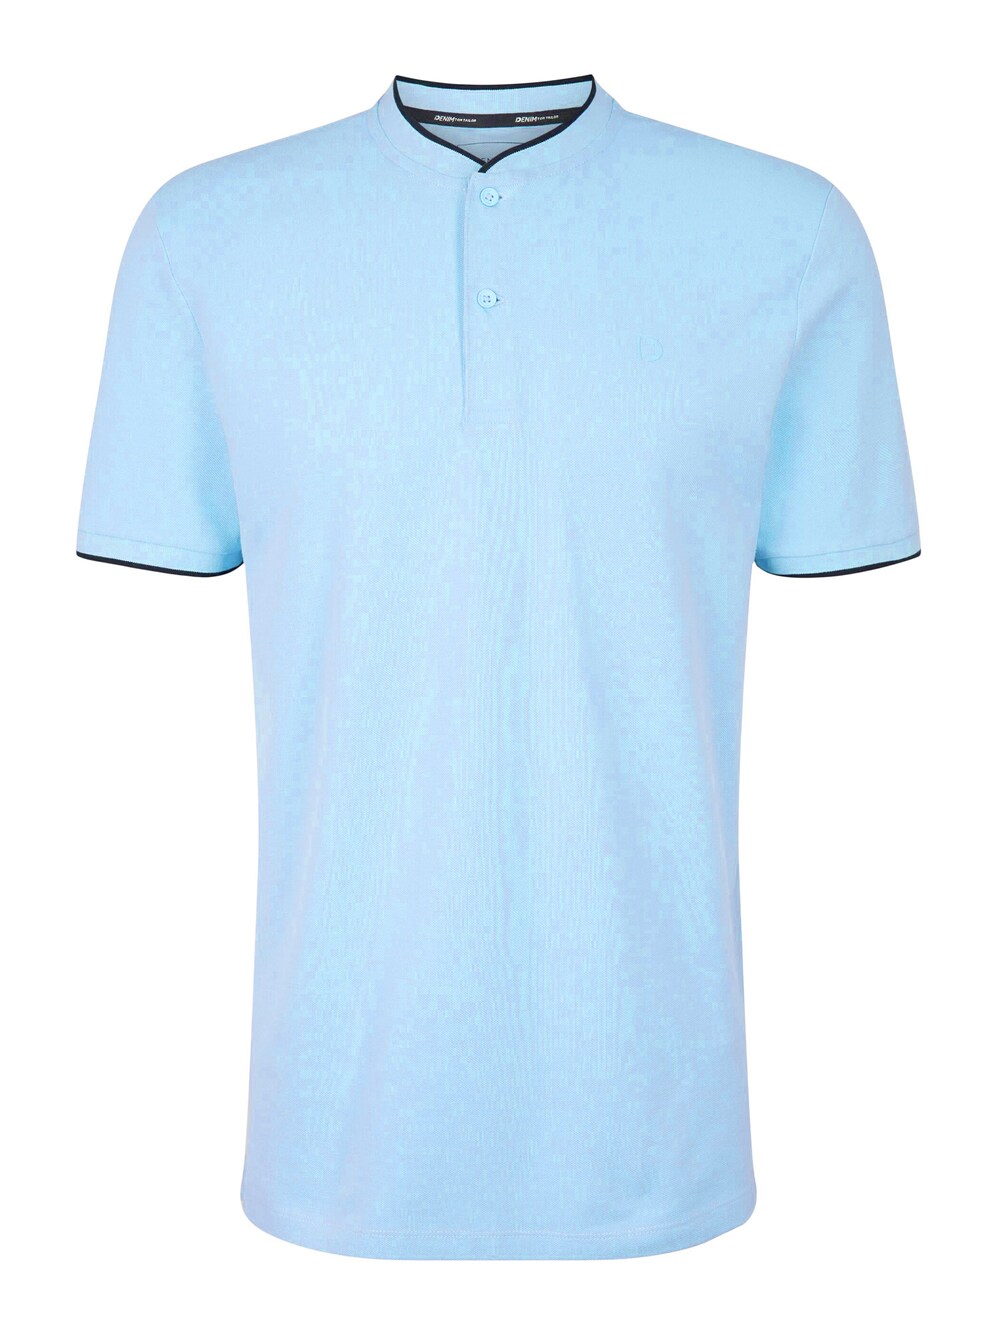 Футболка TOM TAILOR DENIM, темно-синий/светло-голубой футболка tom tailor размер xxl белый голубой